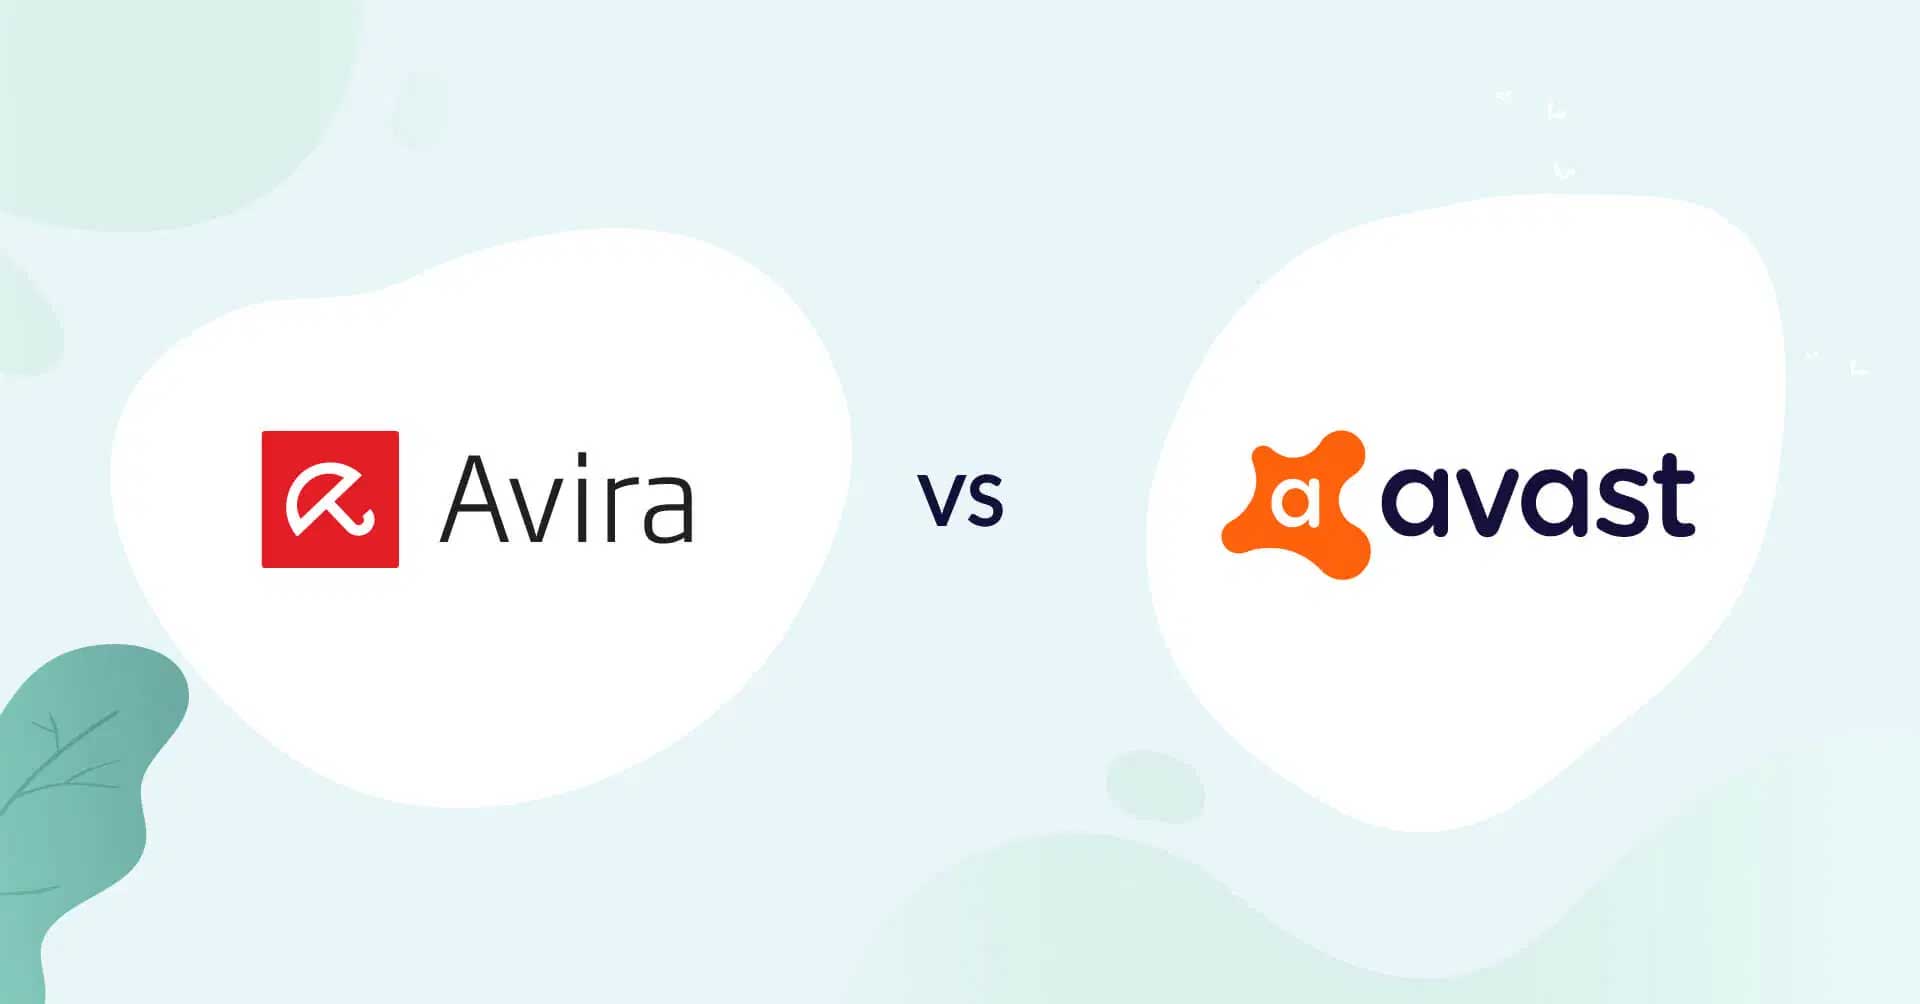 Phần mềm bảo Avira hay Avast tốt hơn